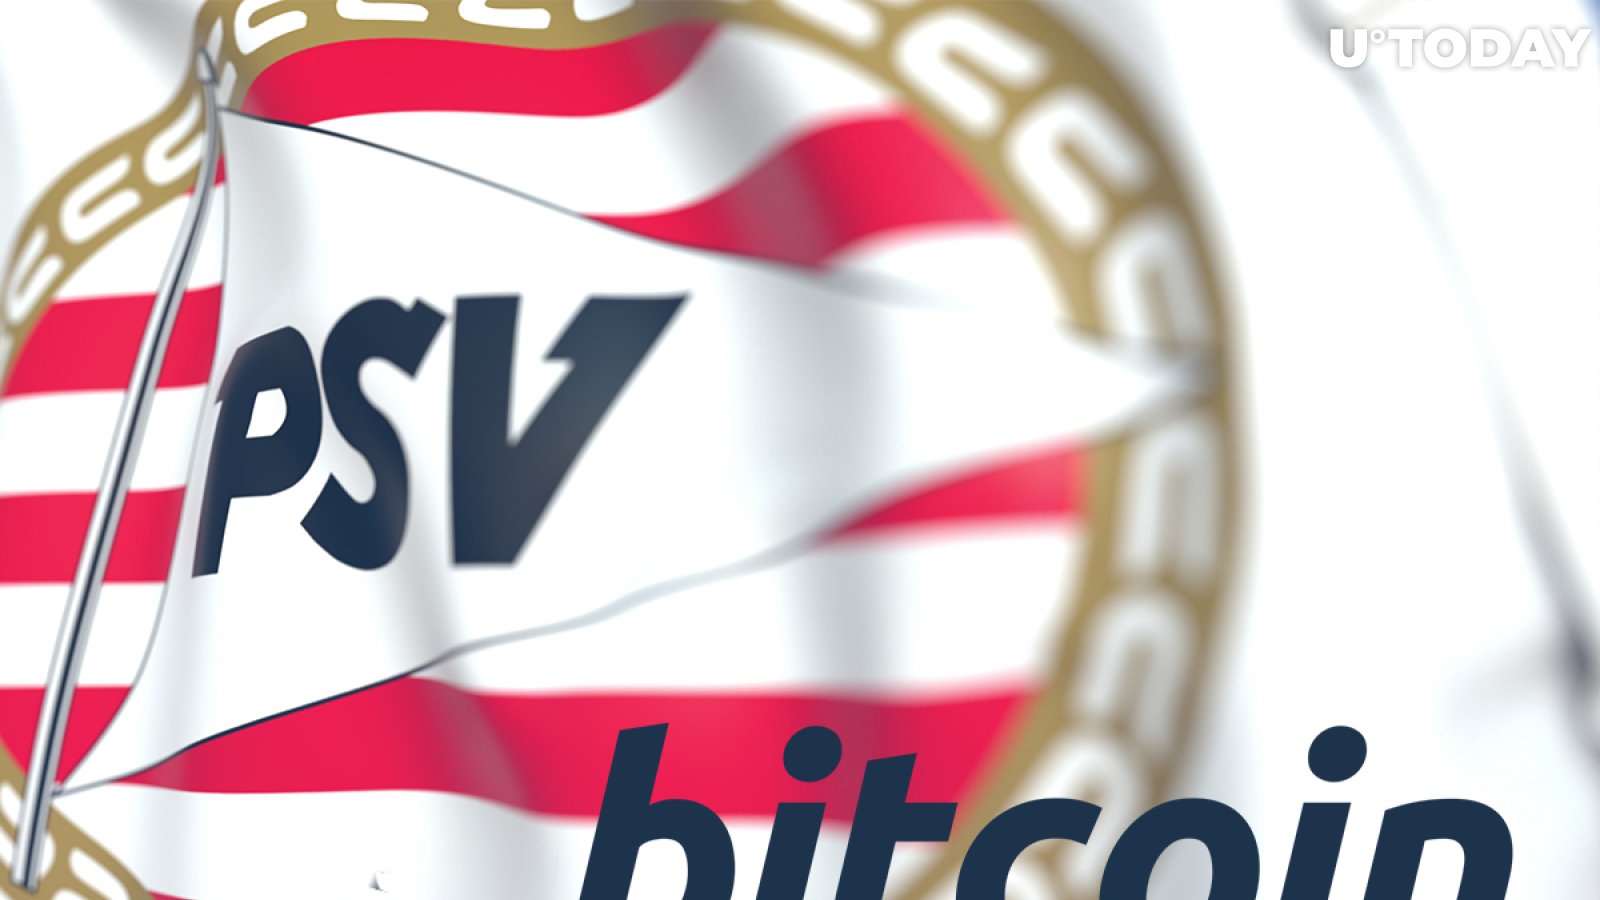 Major European Football Club Gets Bitcoin-Only Sponsorship Deal